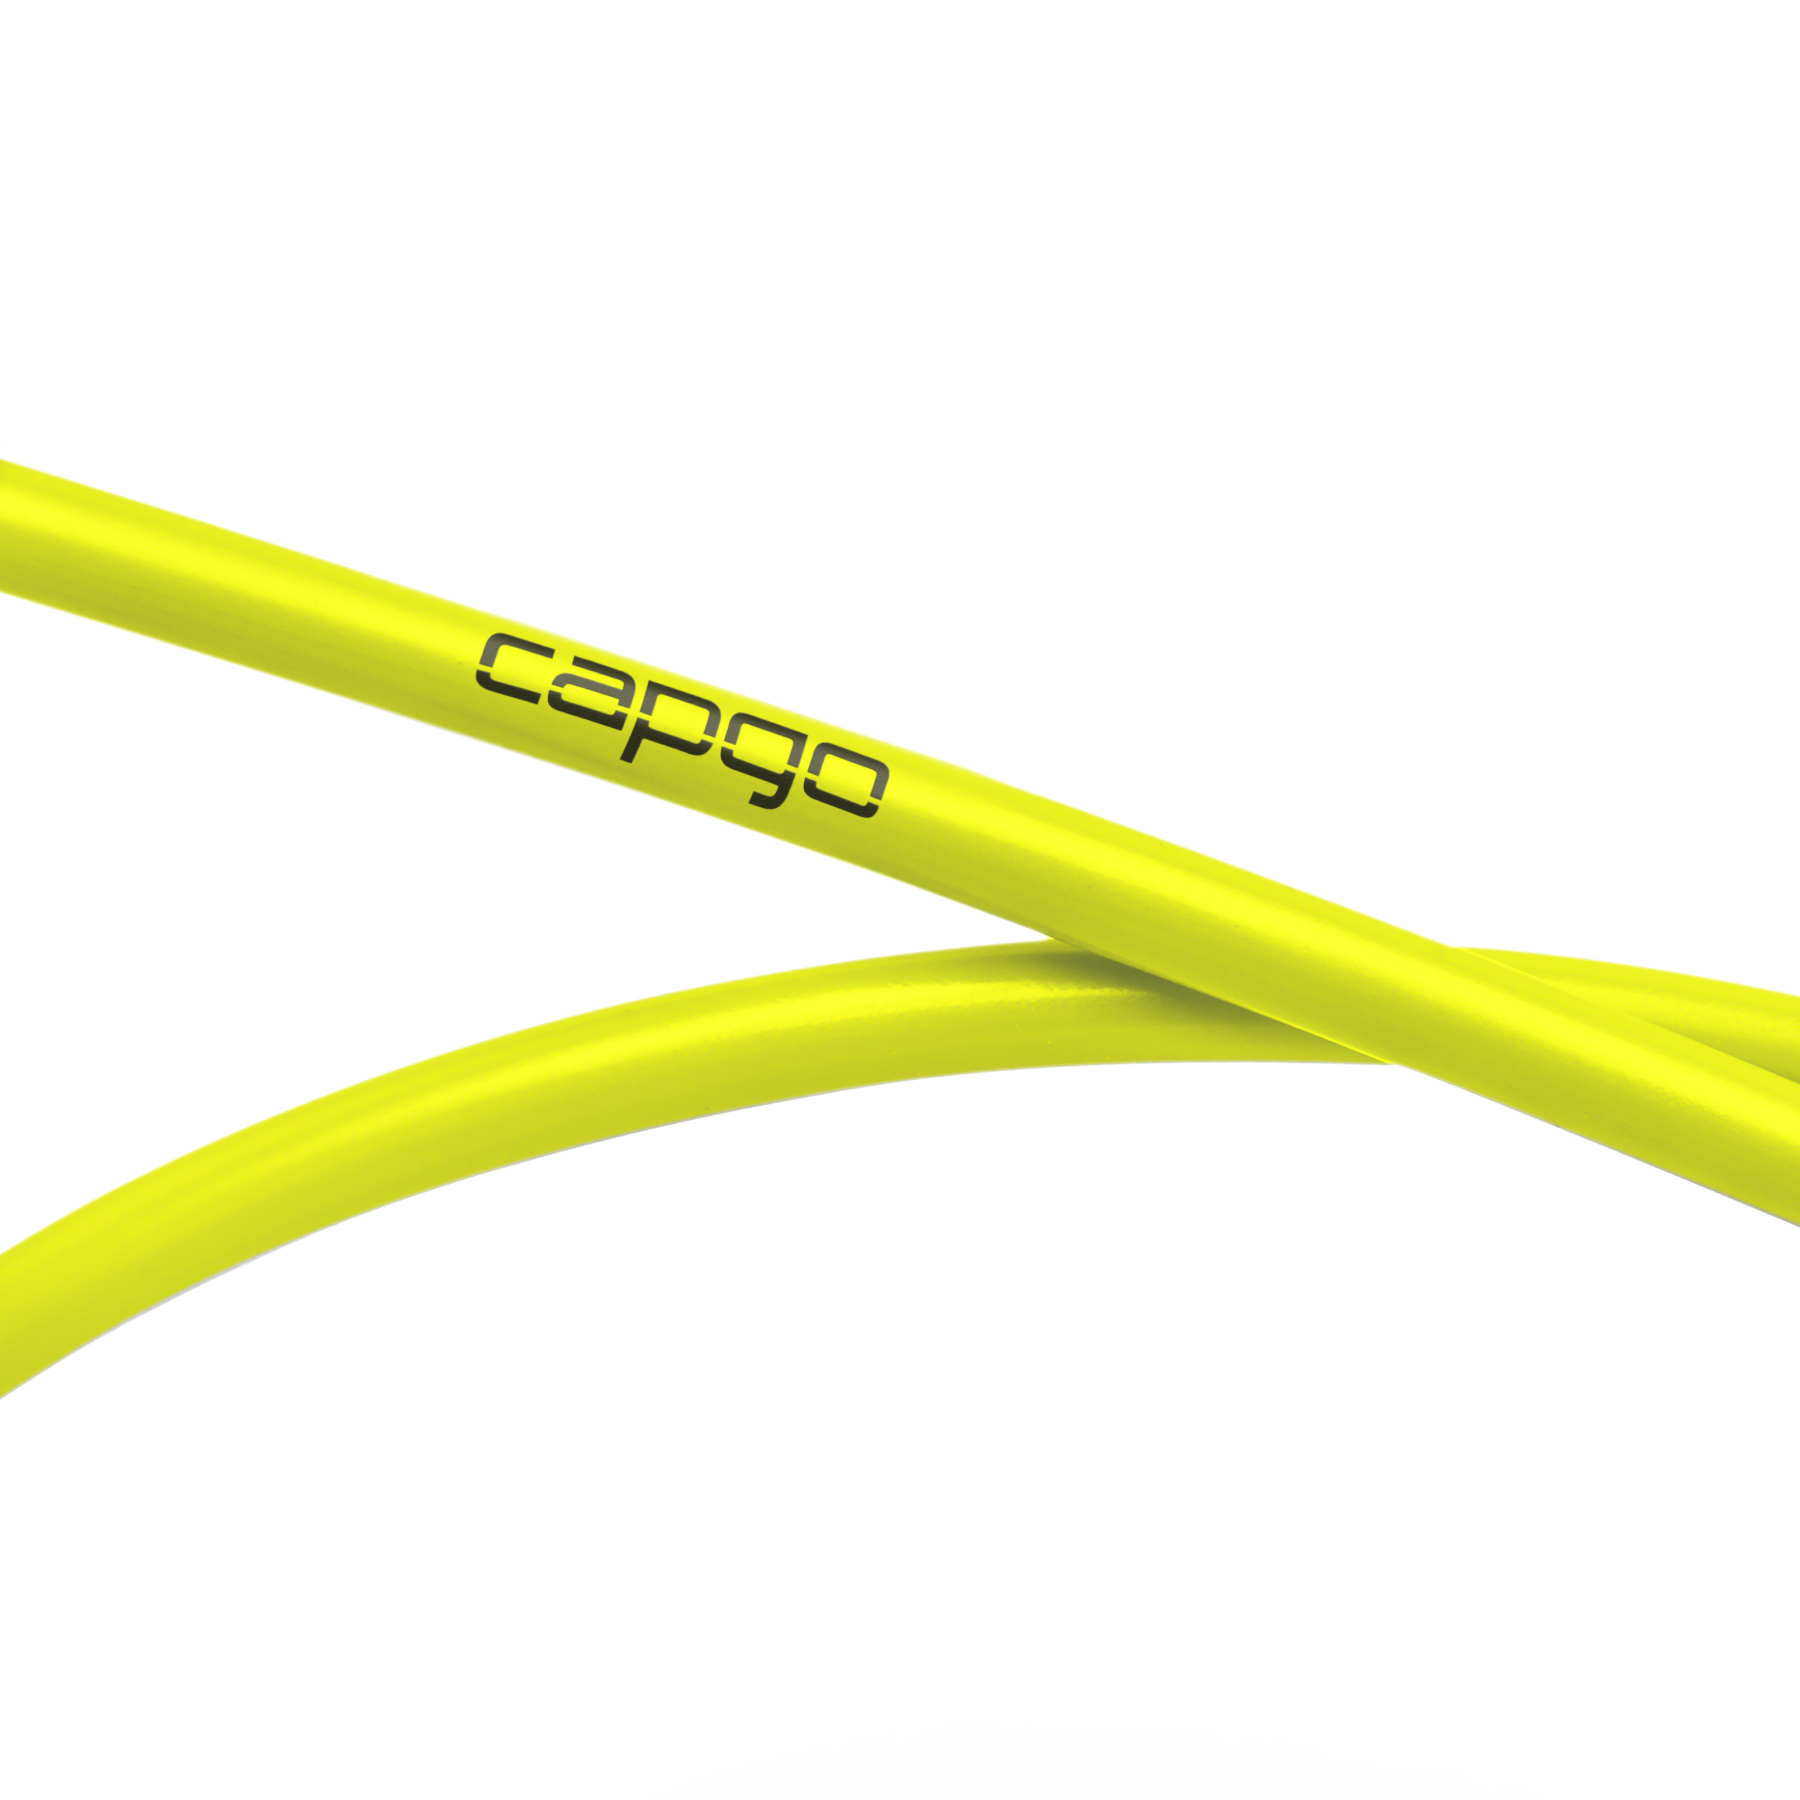 Productfoto van capgo Blue Line Shift Cable Housing - 4 mm - PTFE - 3000 mm - neon yellow